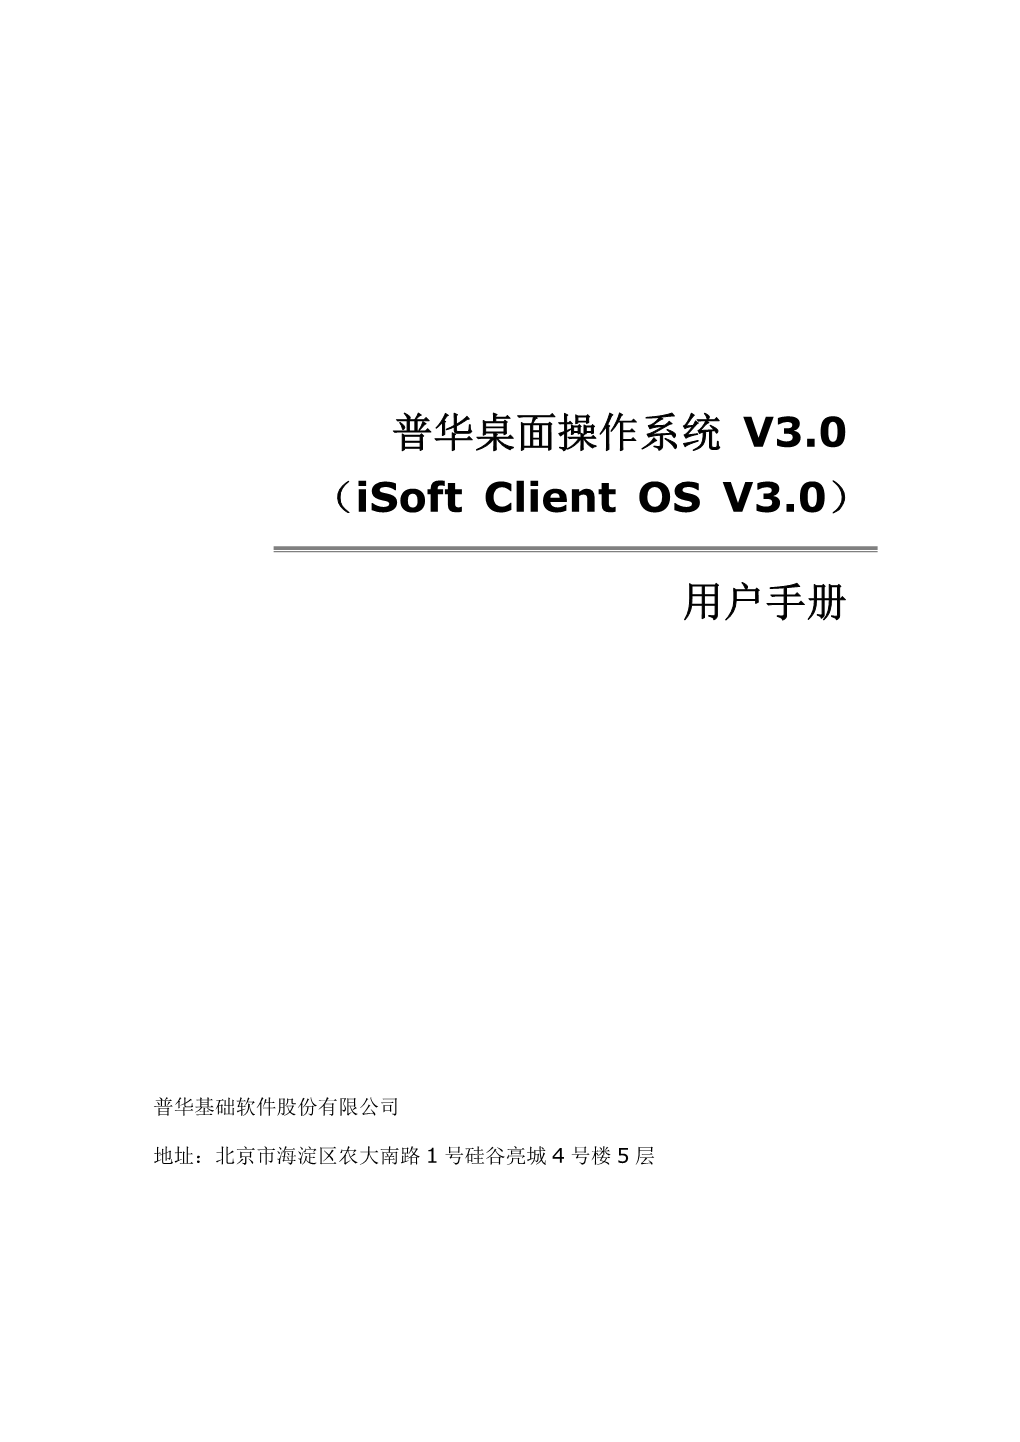 普华桌面操作系统V3.0 （Isoft Client OS V3.0） 用户手册